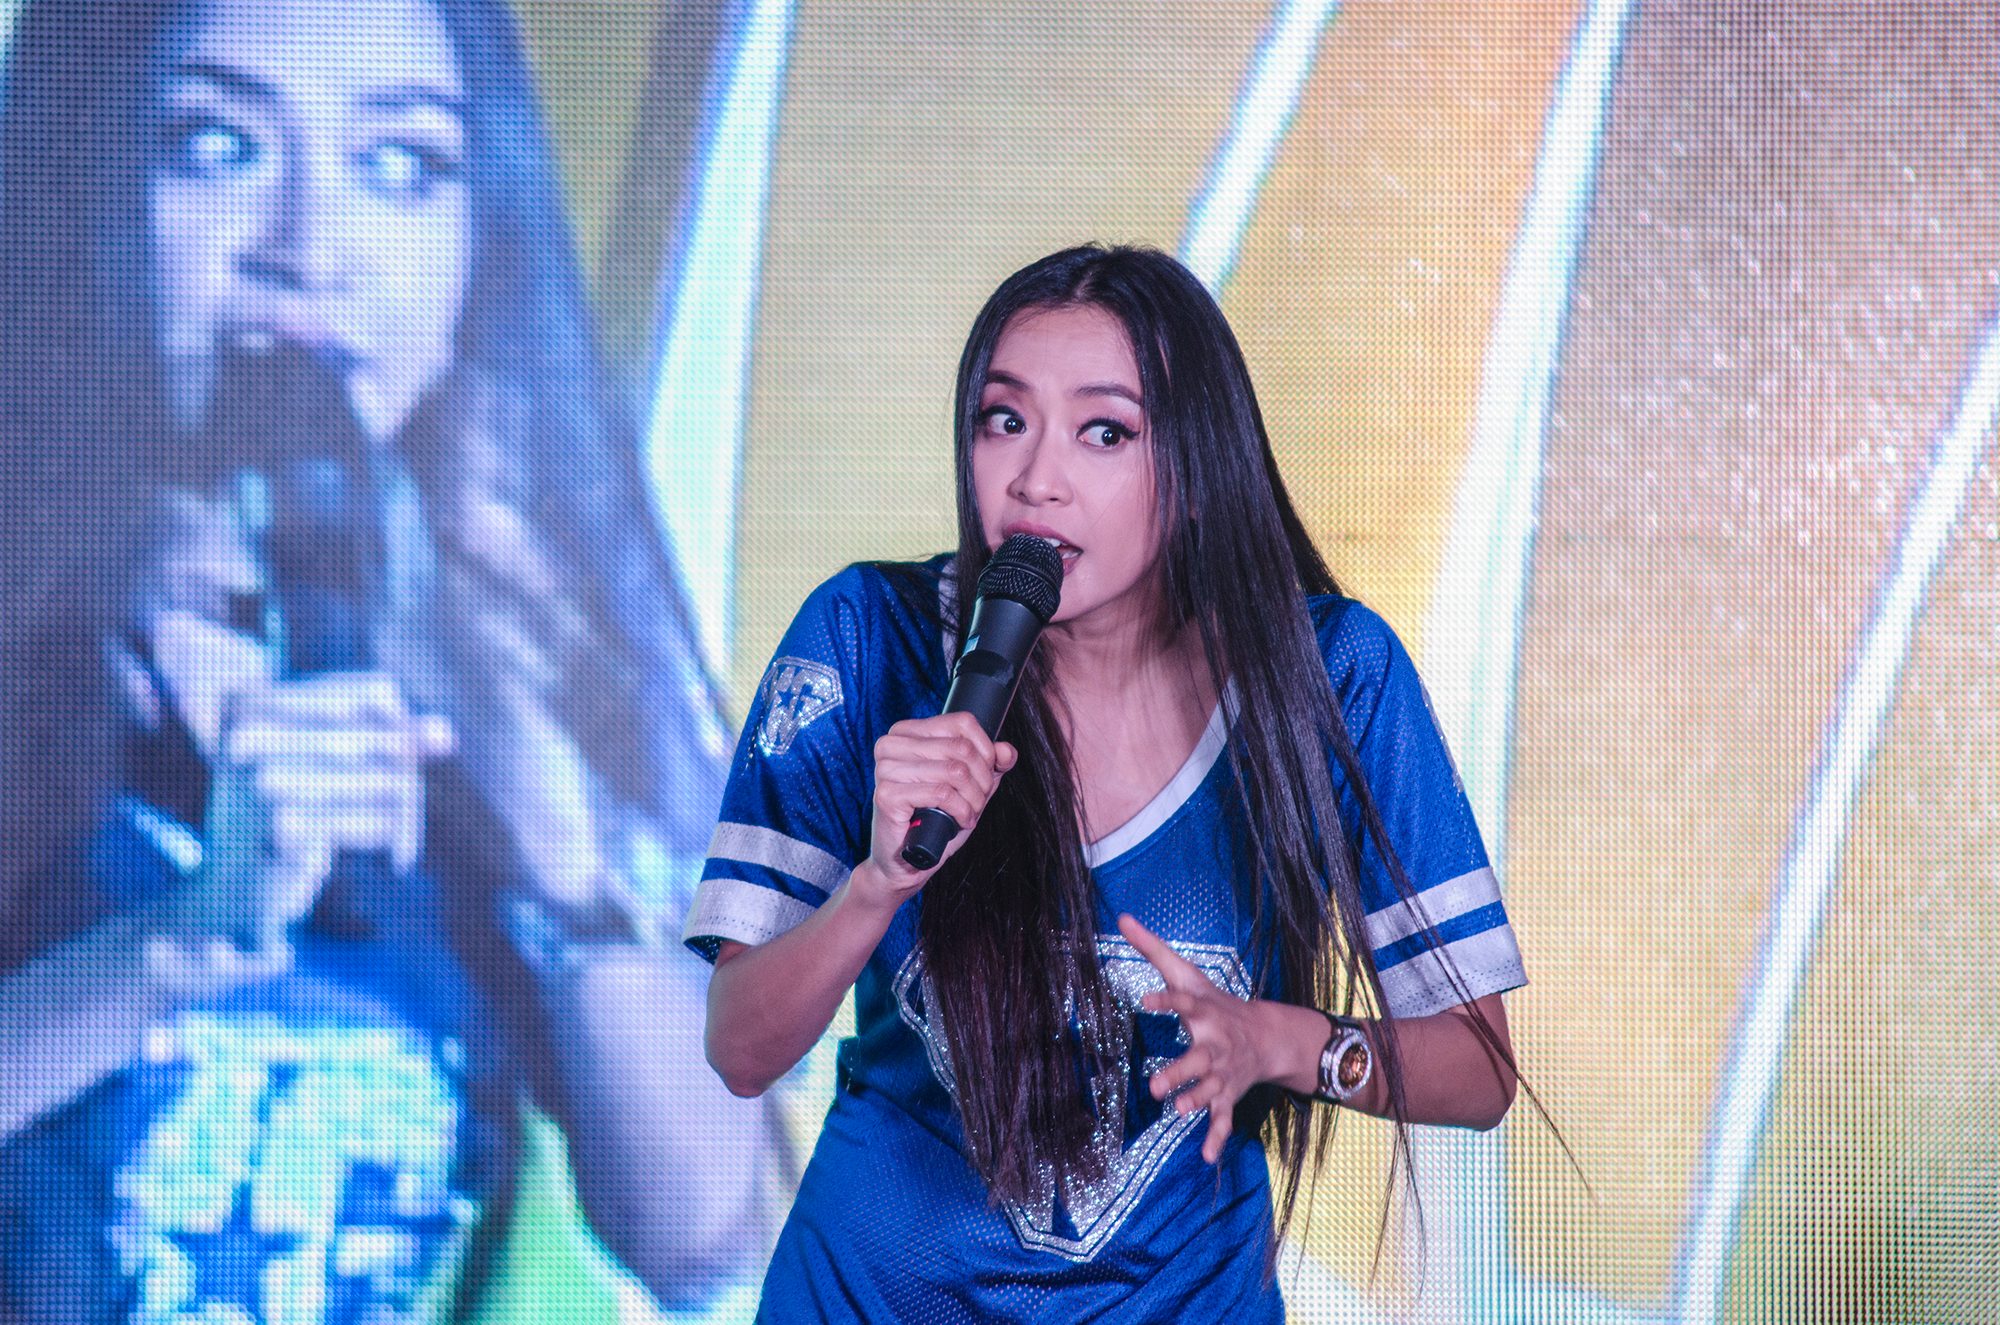 Mocha Girls singer Mocha Uson weighs in on twerk scandal